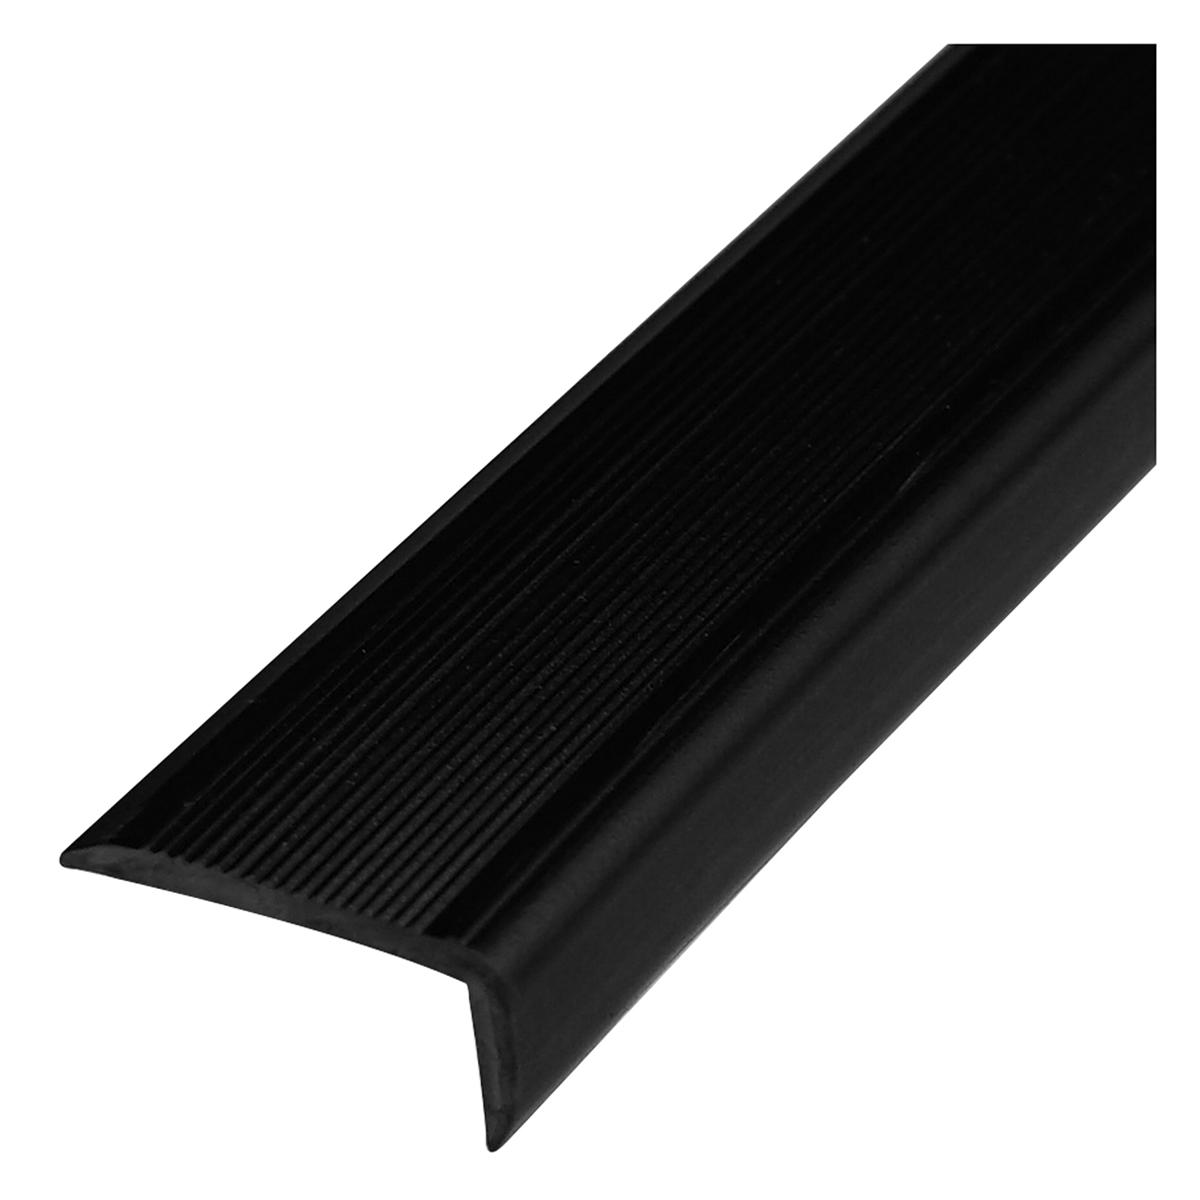 Perfil Antideslizante L Para Escaleras Pvc - Negro - 3.5X100 cm